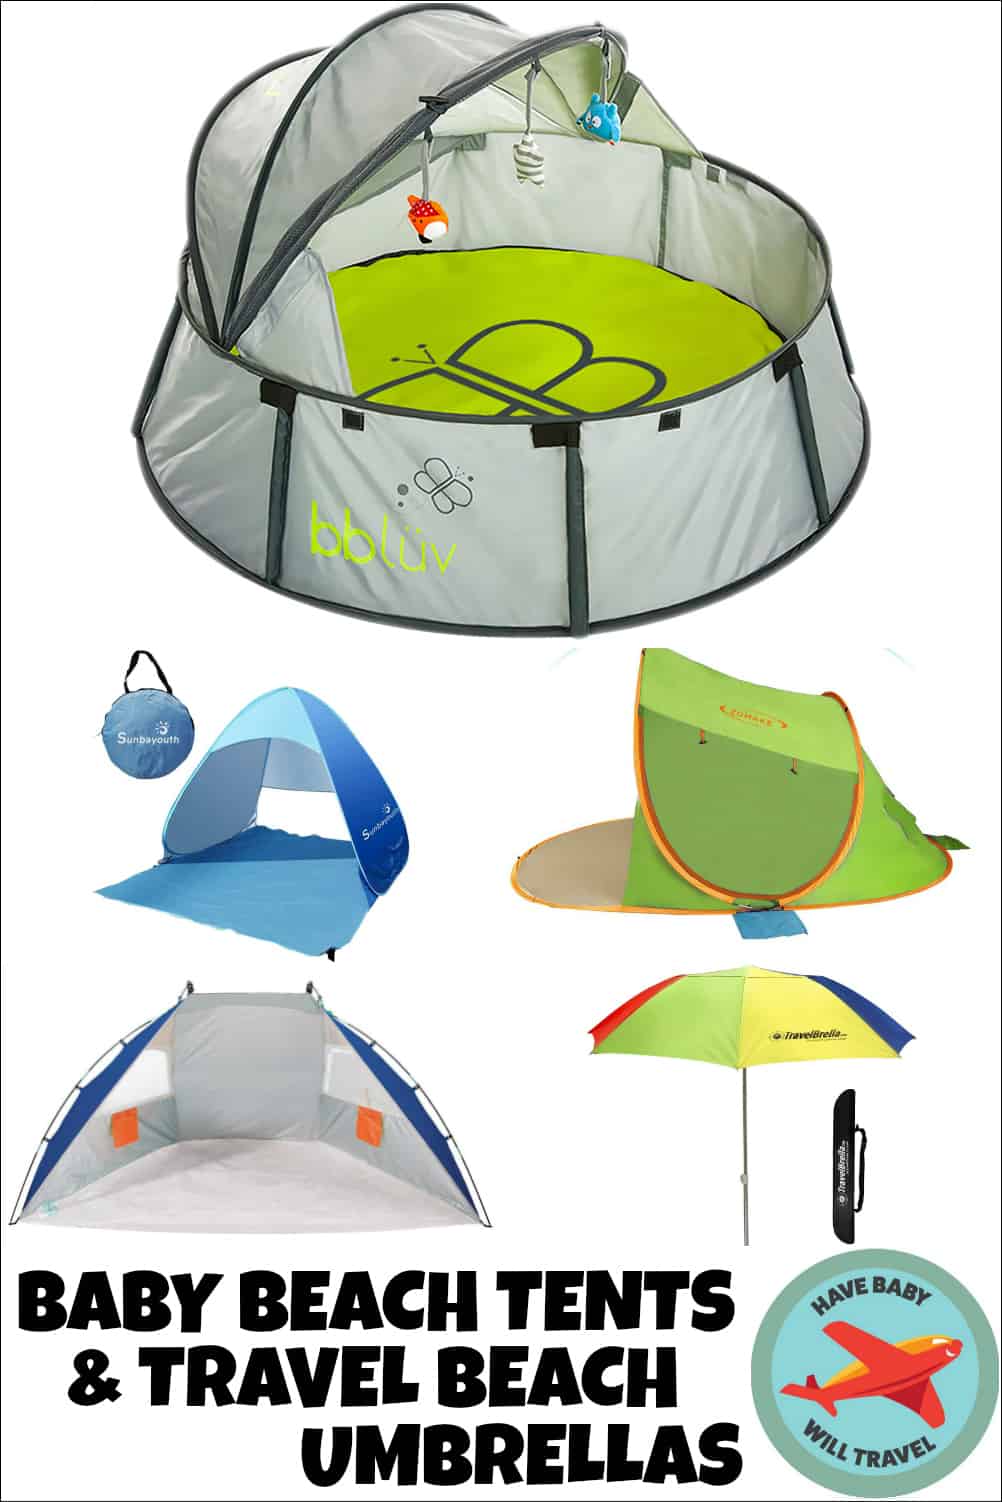 foldable beach umbrella for suitcase